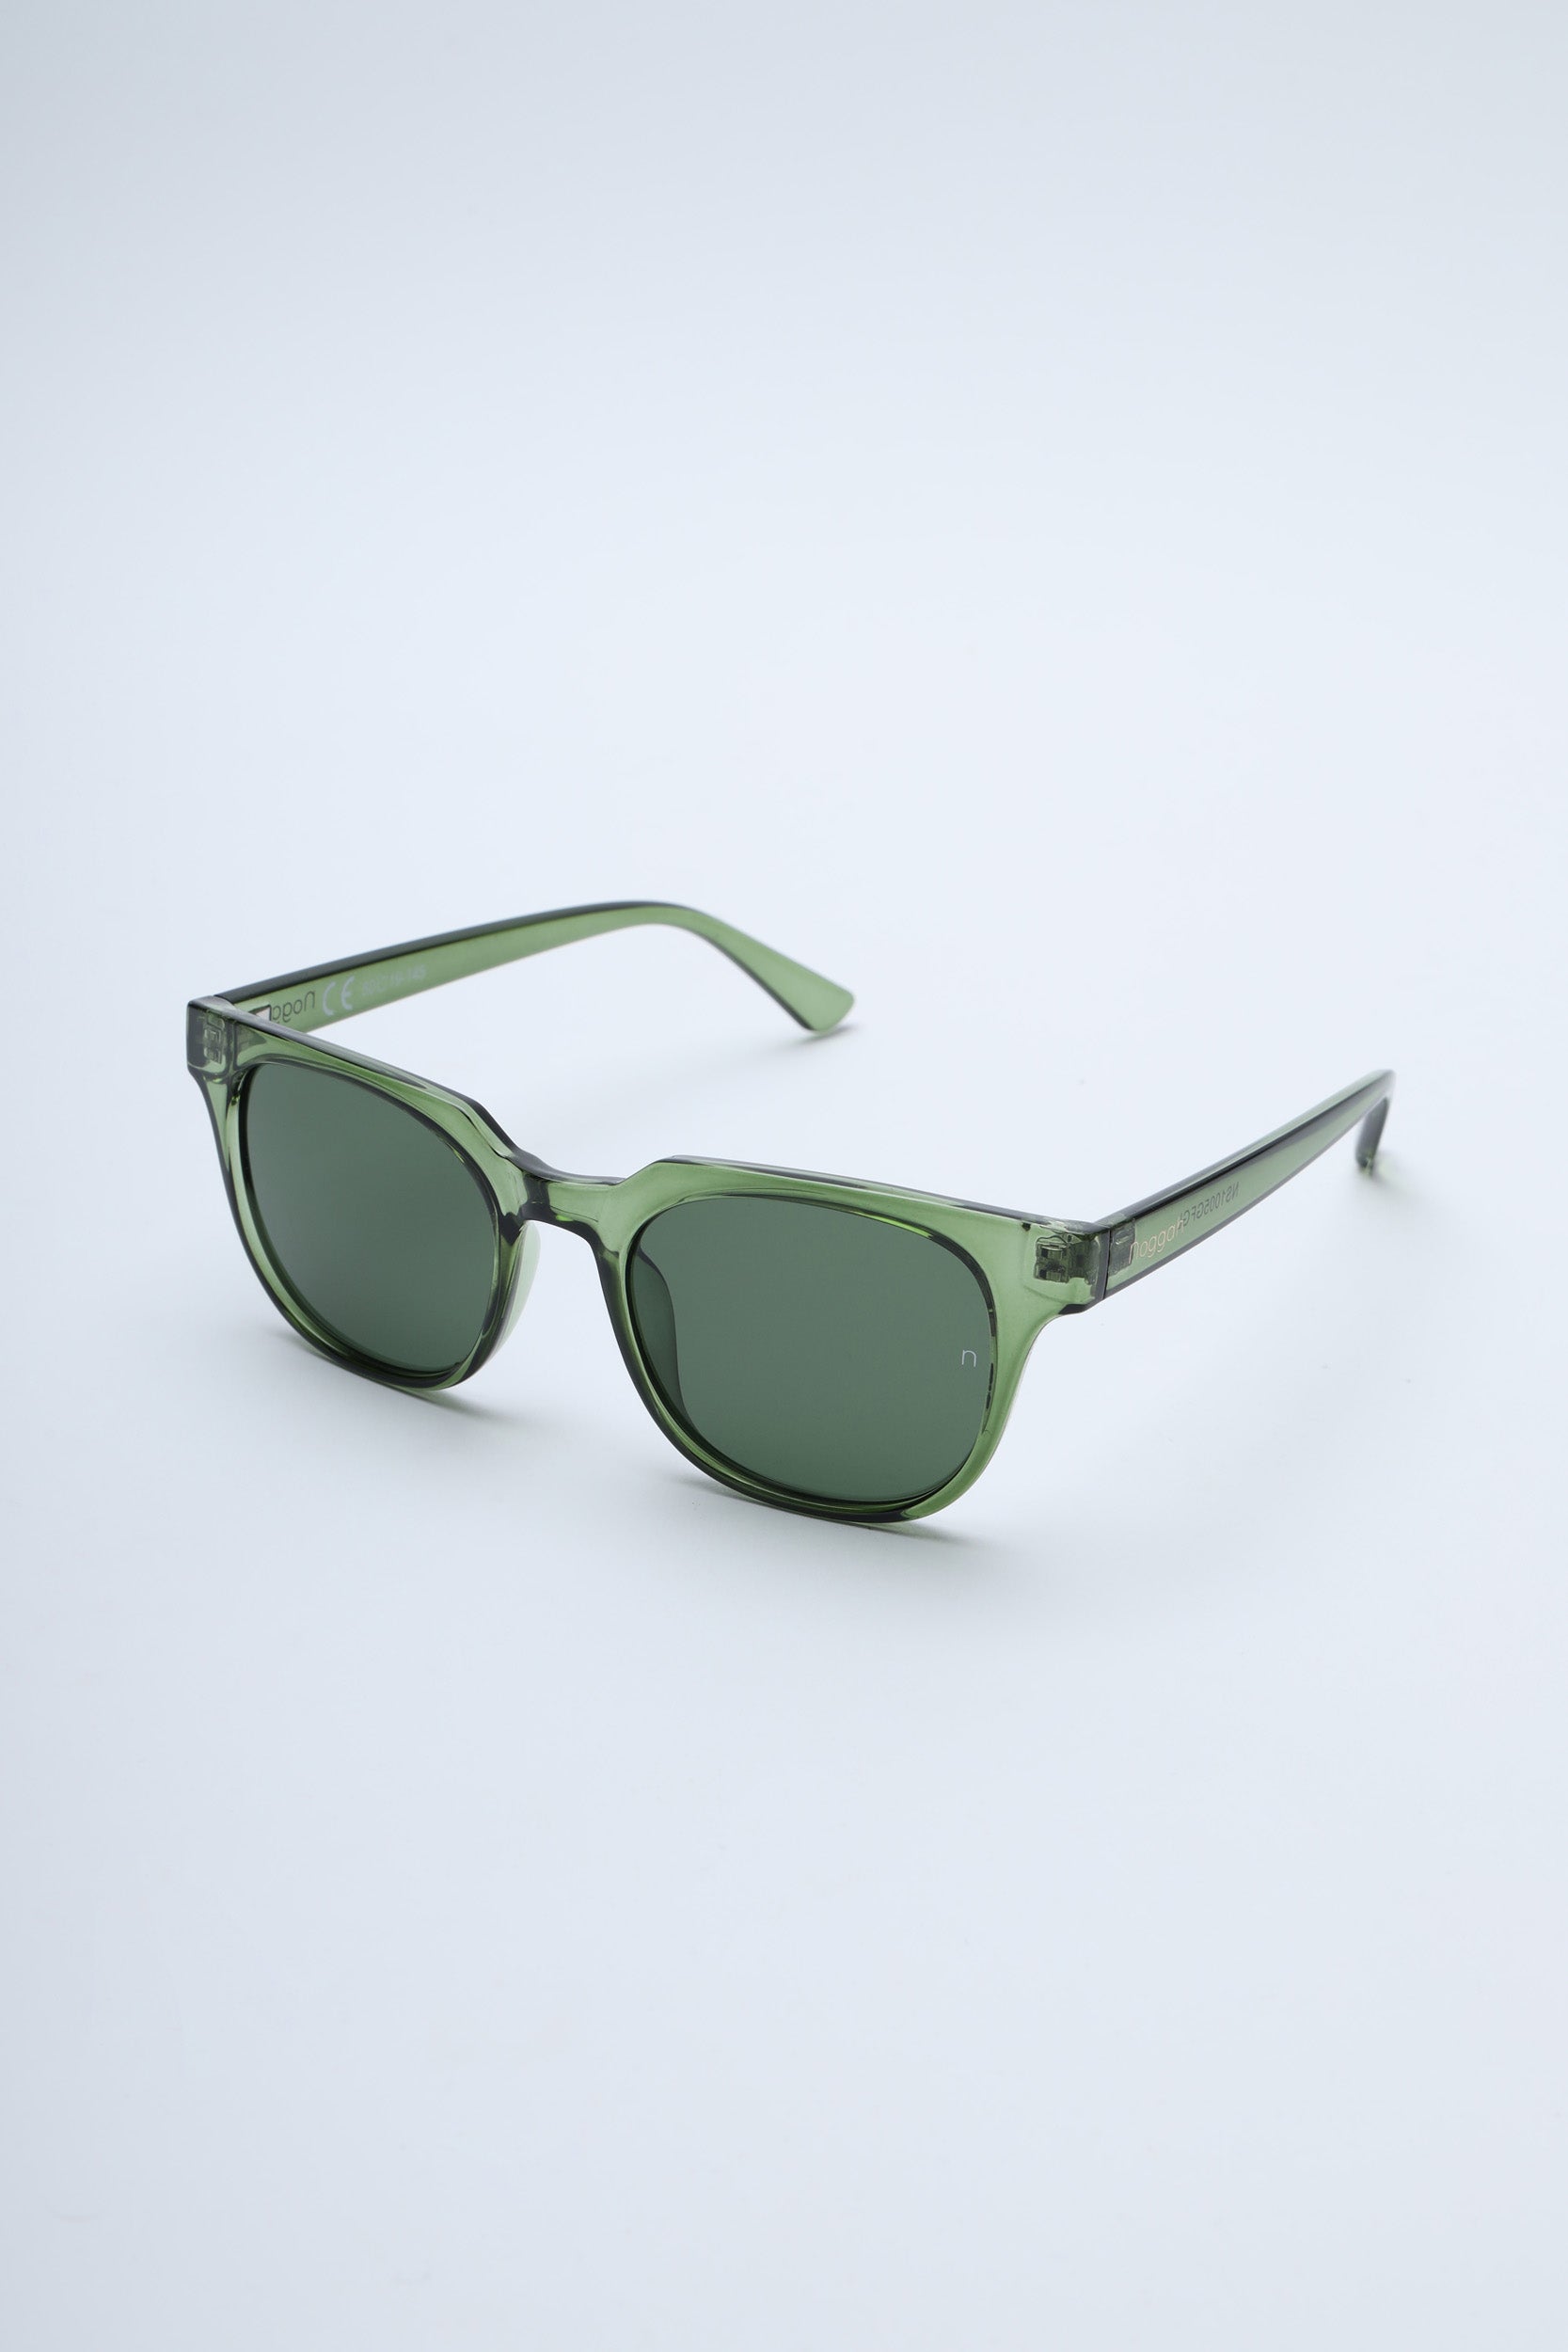 Cee Lo Green Sunglasses – Gazal Eyecare Shop